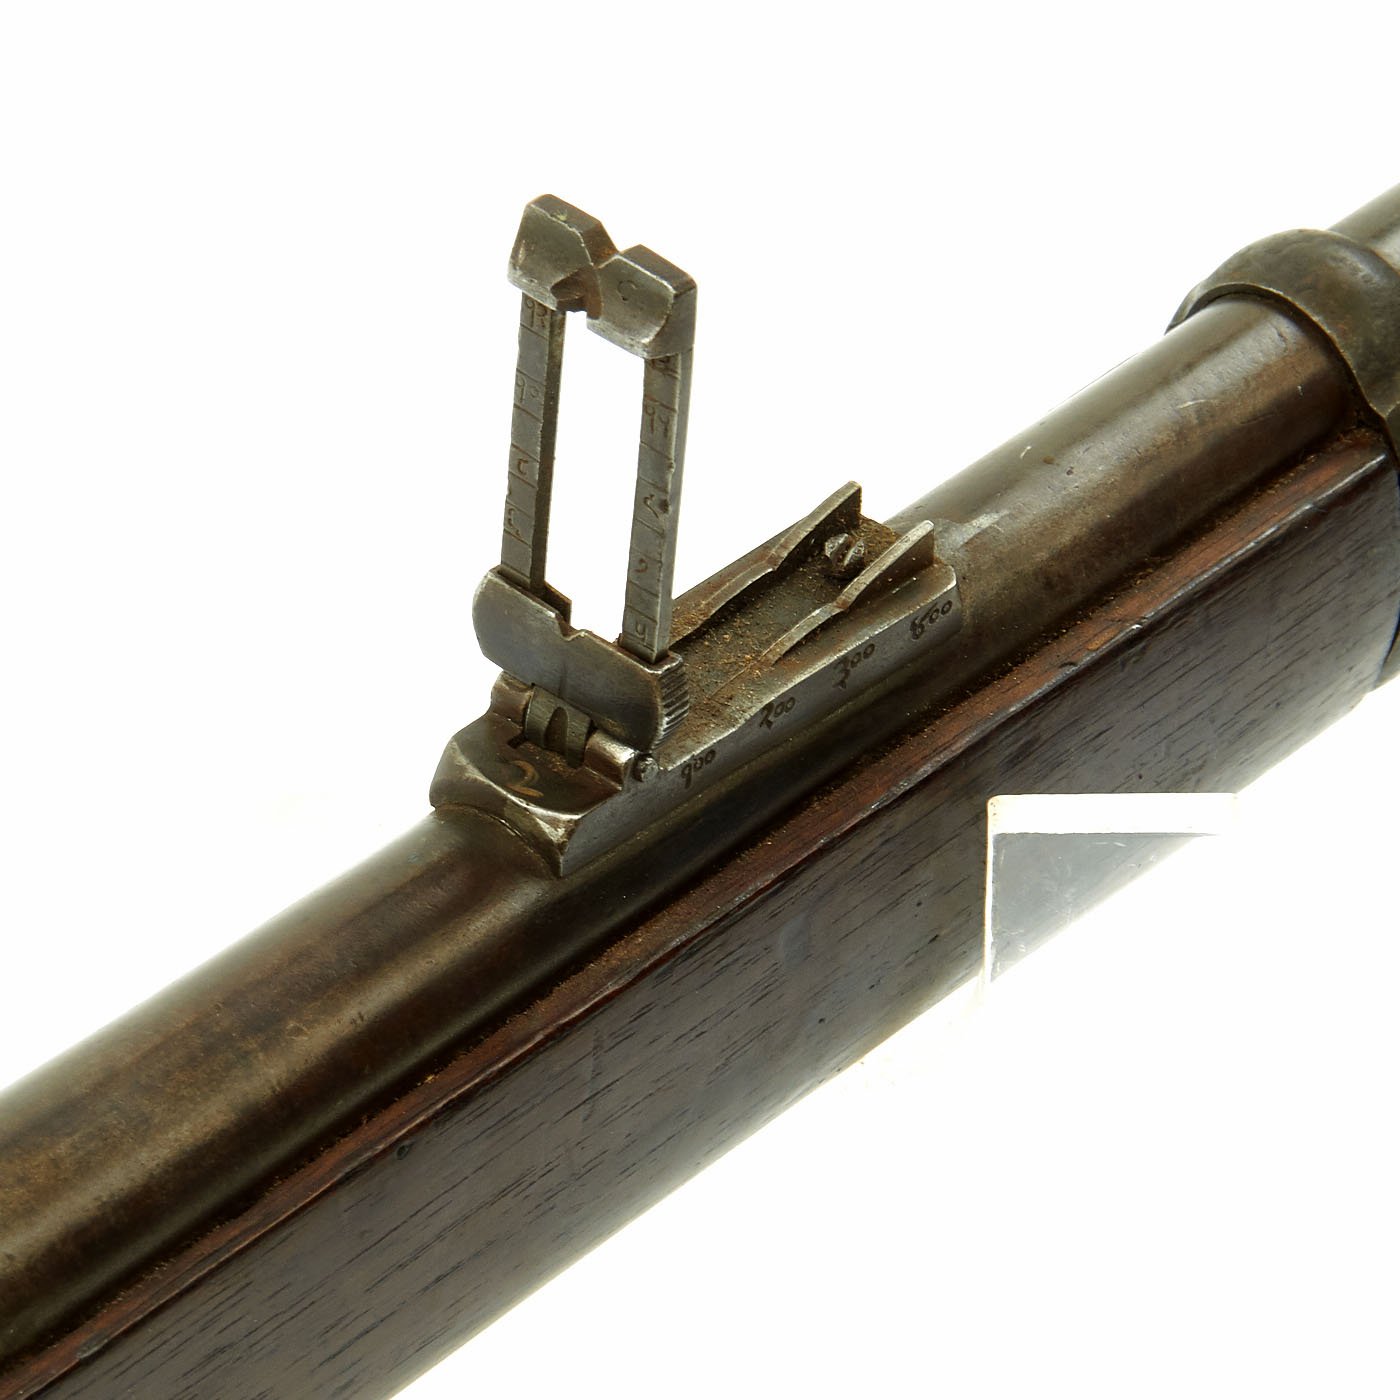 Francotte patent .303 rifle